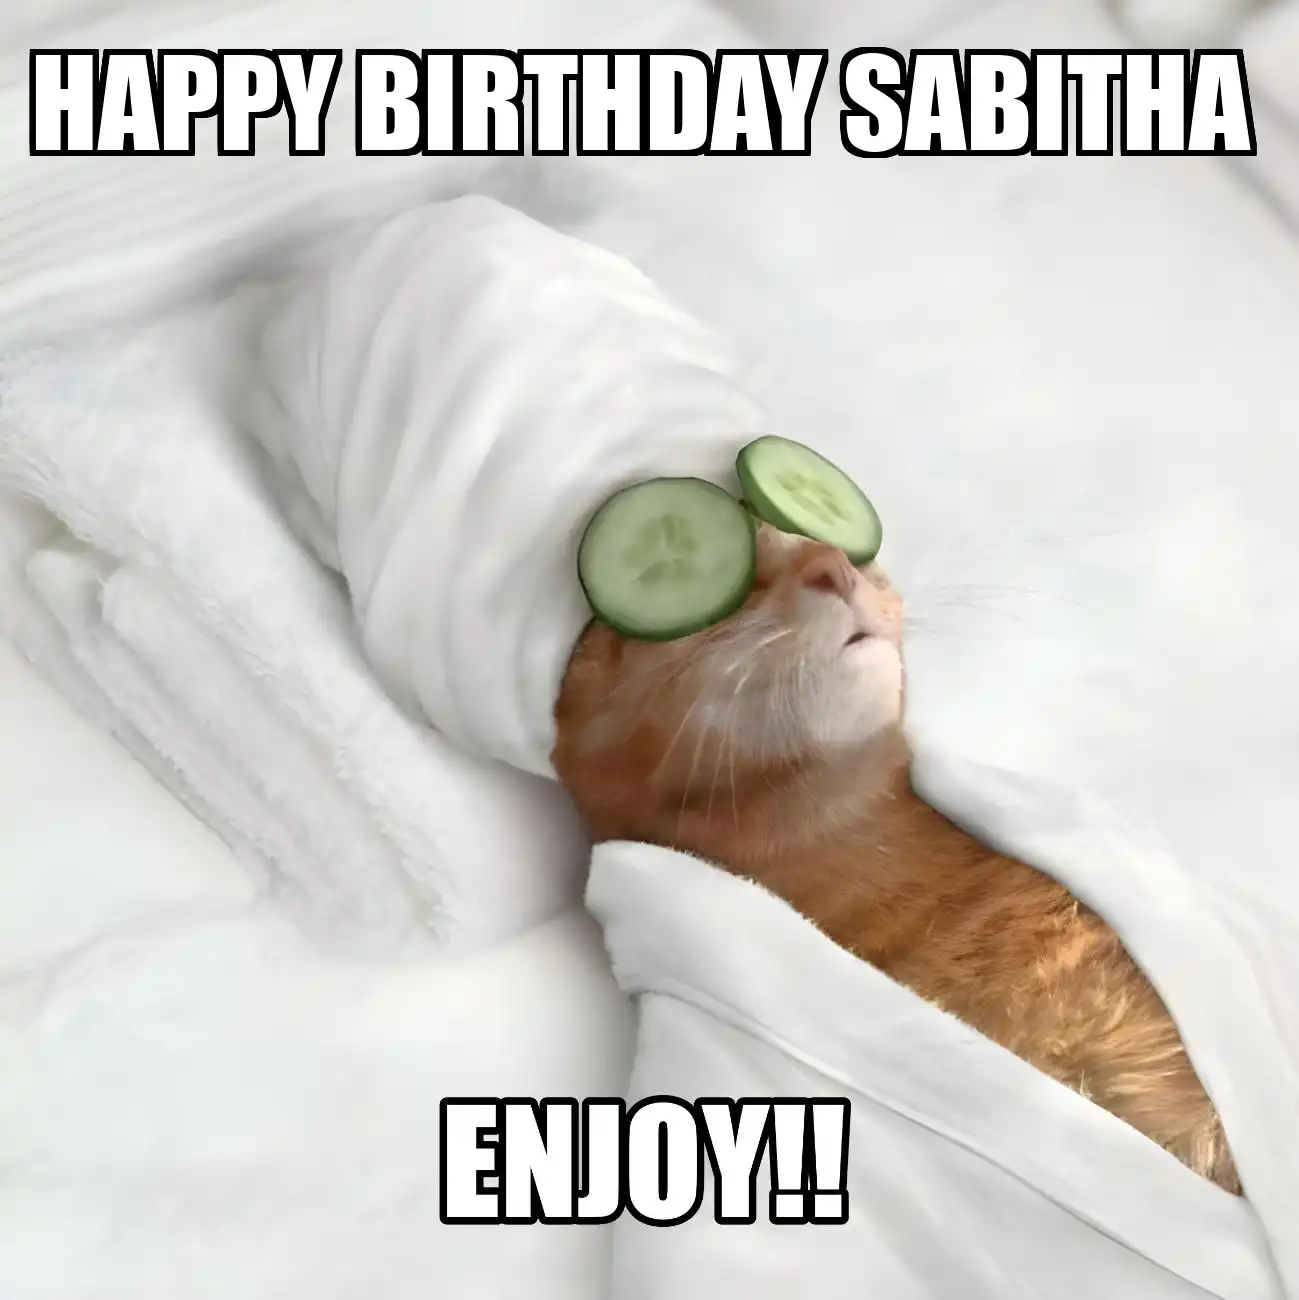 Happy Birthday Sabitha Enjoy Cat Meme